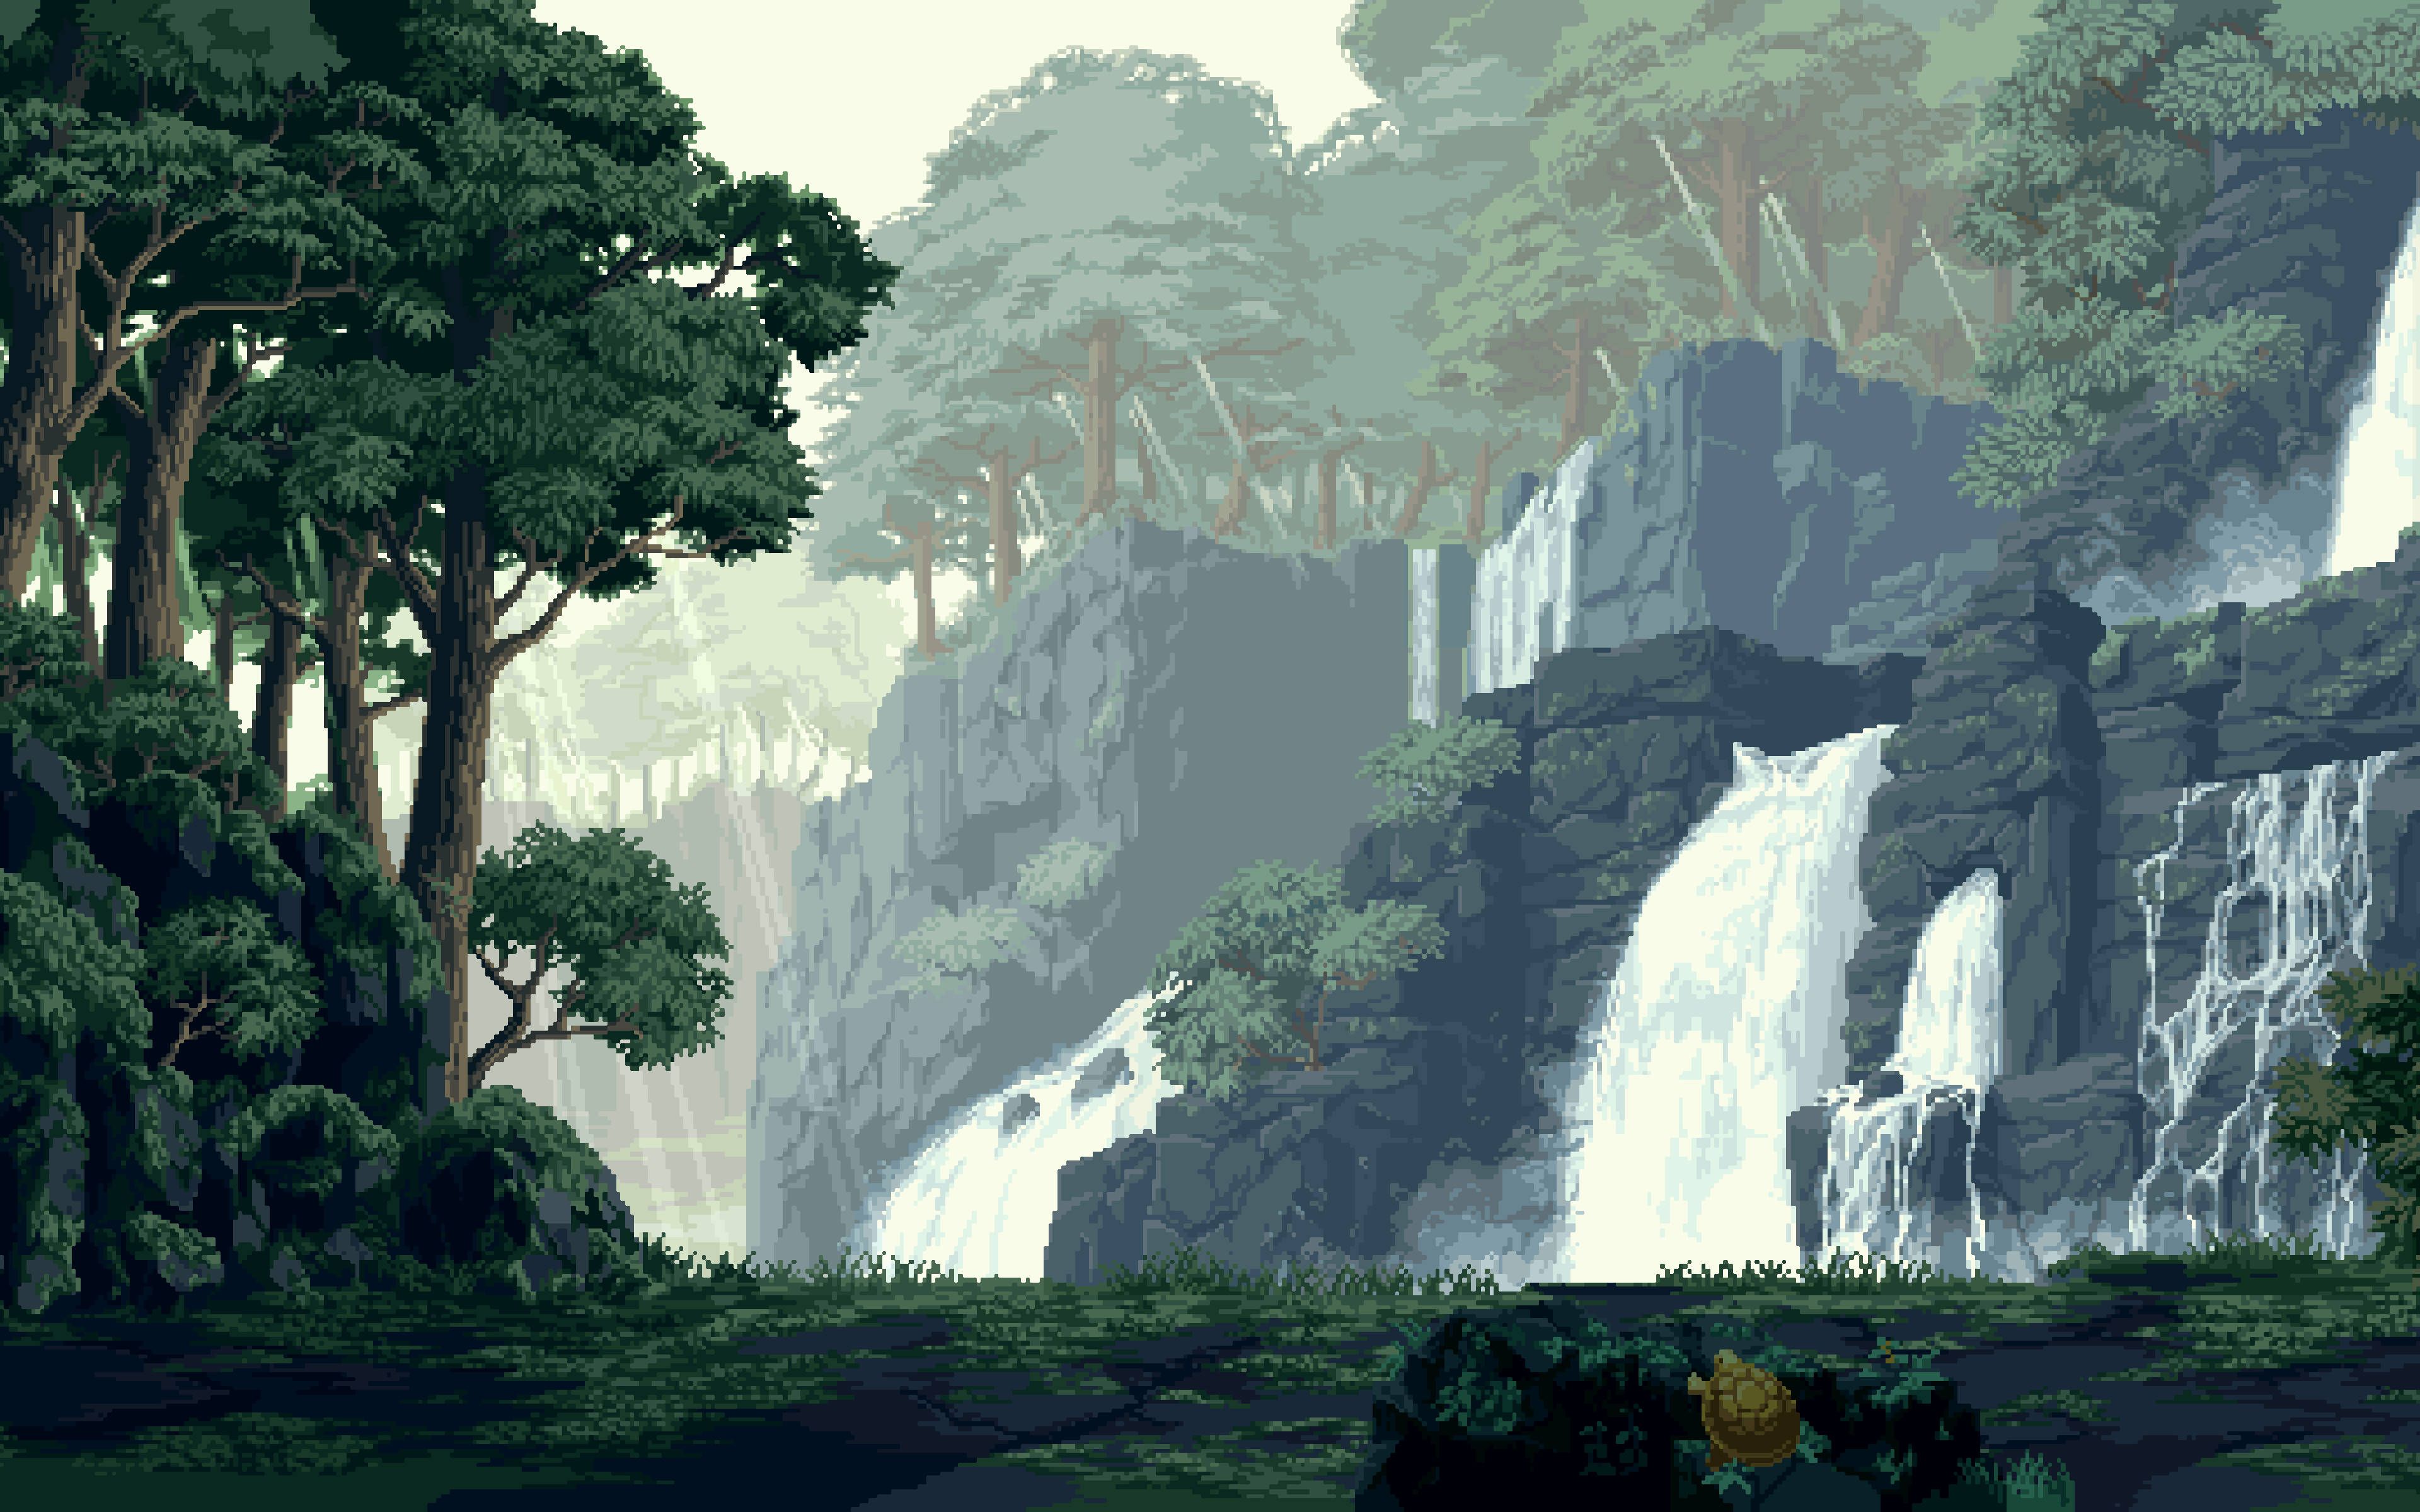 Pixel art of a waterfall in a dense forest - Pixel art